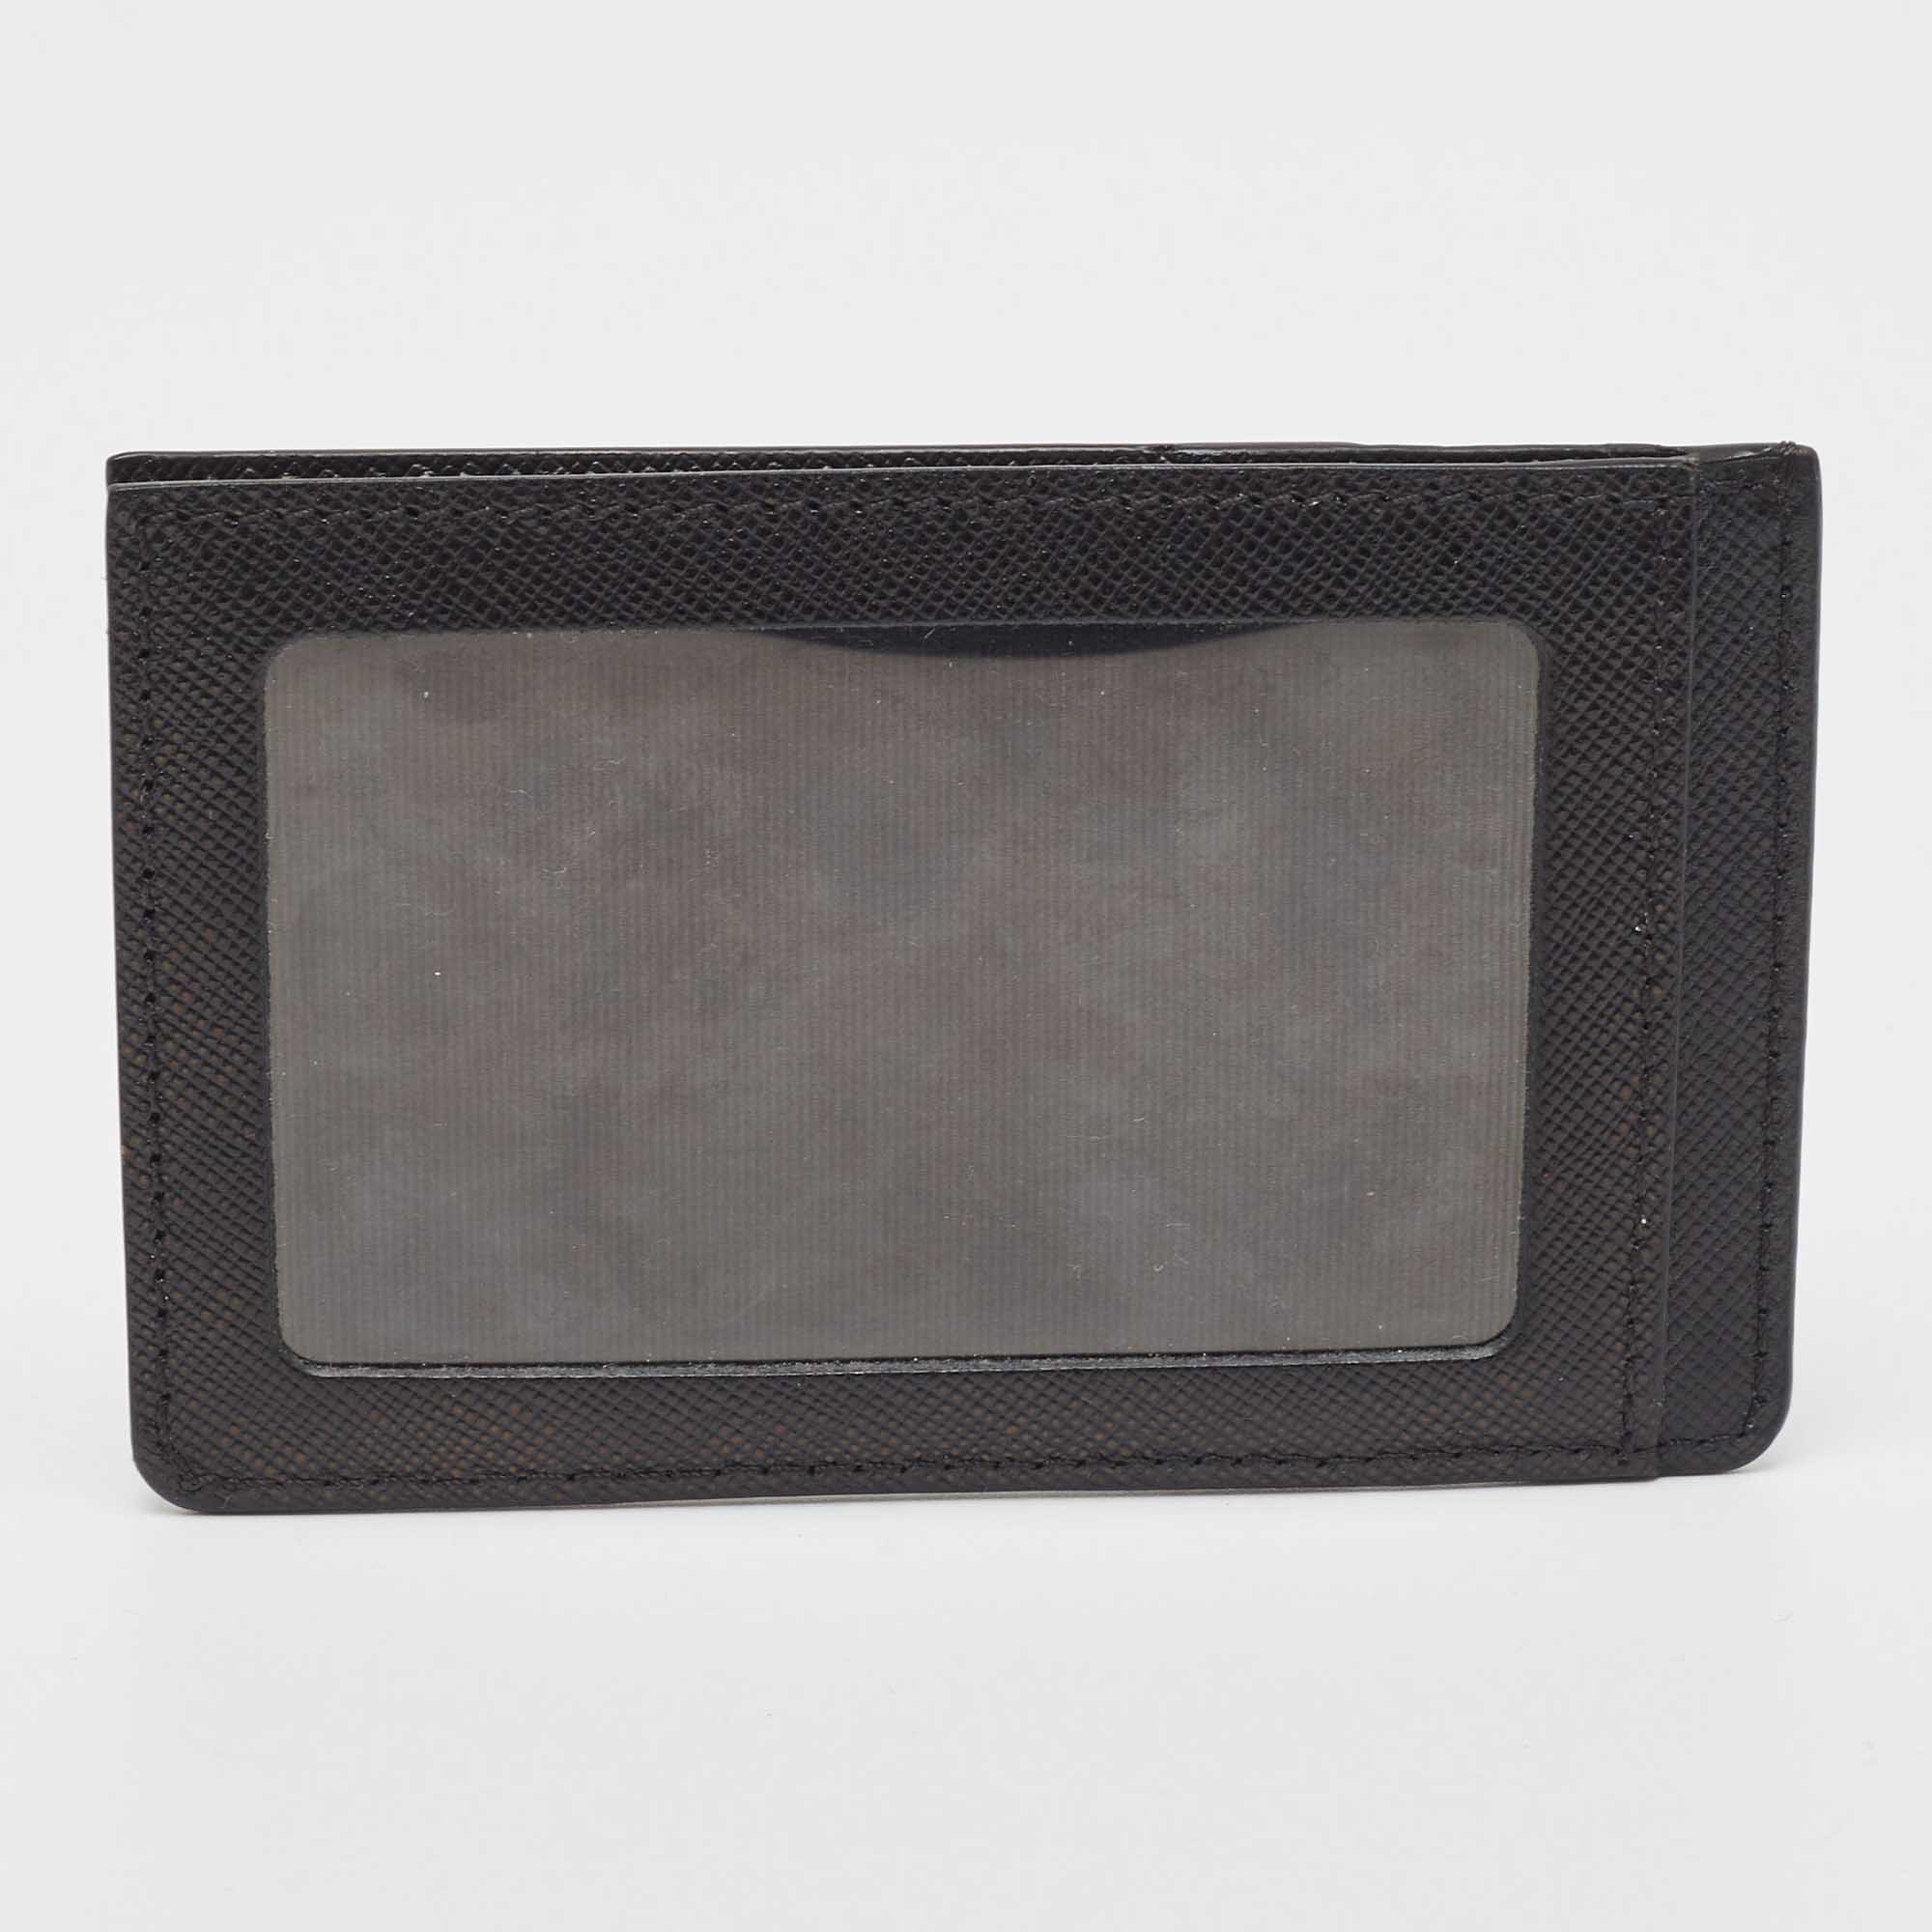 CH Carolina Herrera Black Leather ID Card Holder